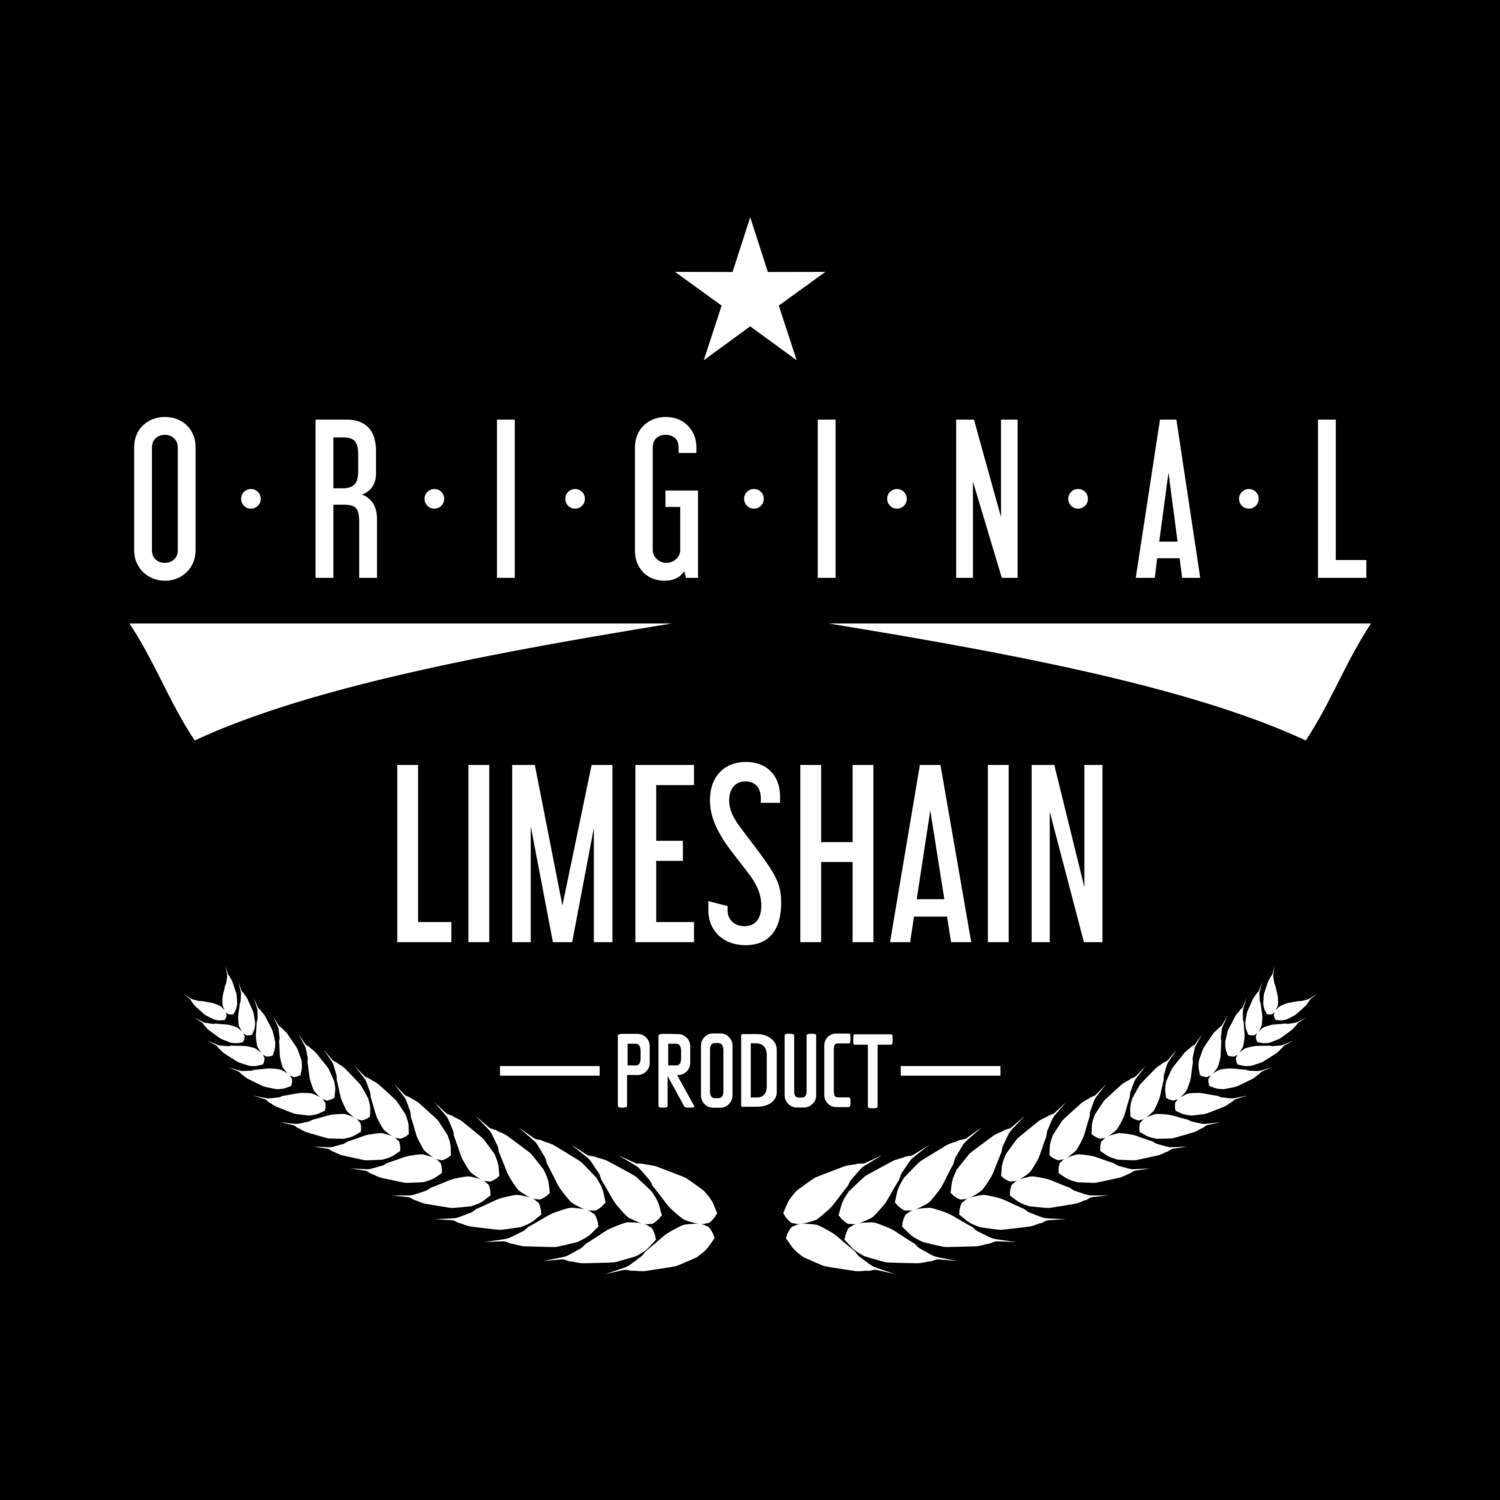 Limeshain T-Shirt »Original Product«